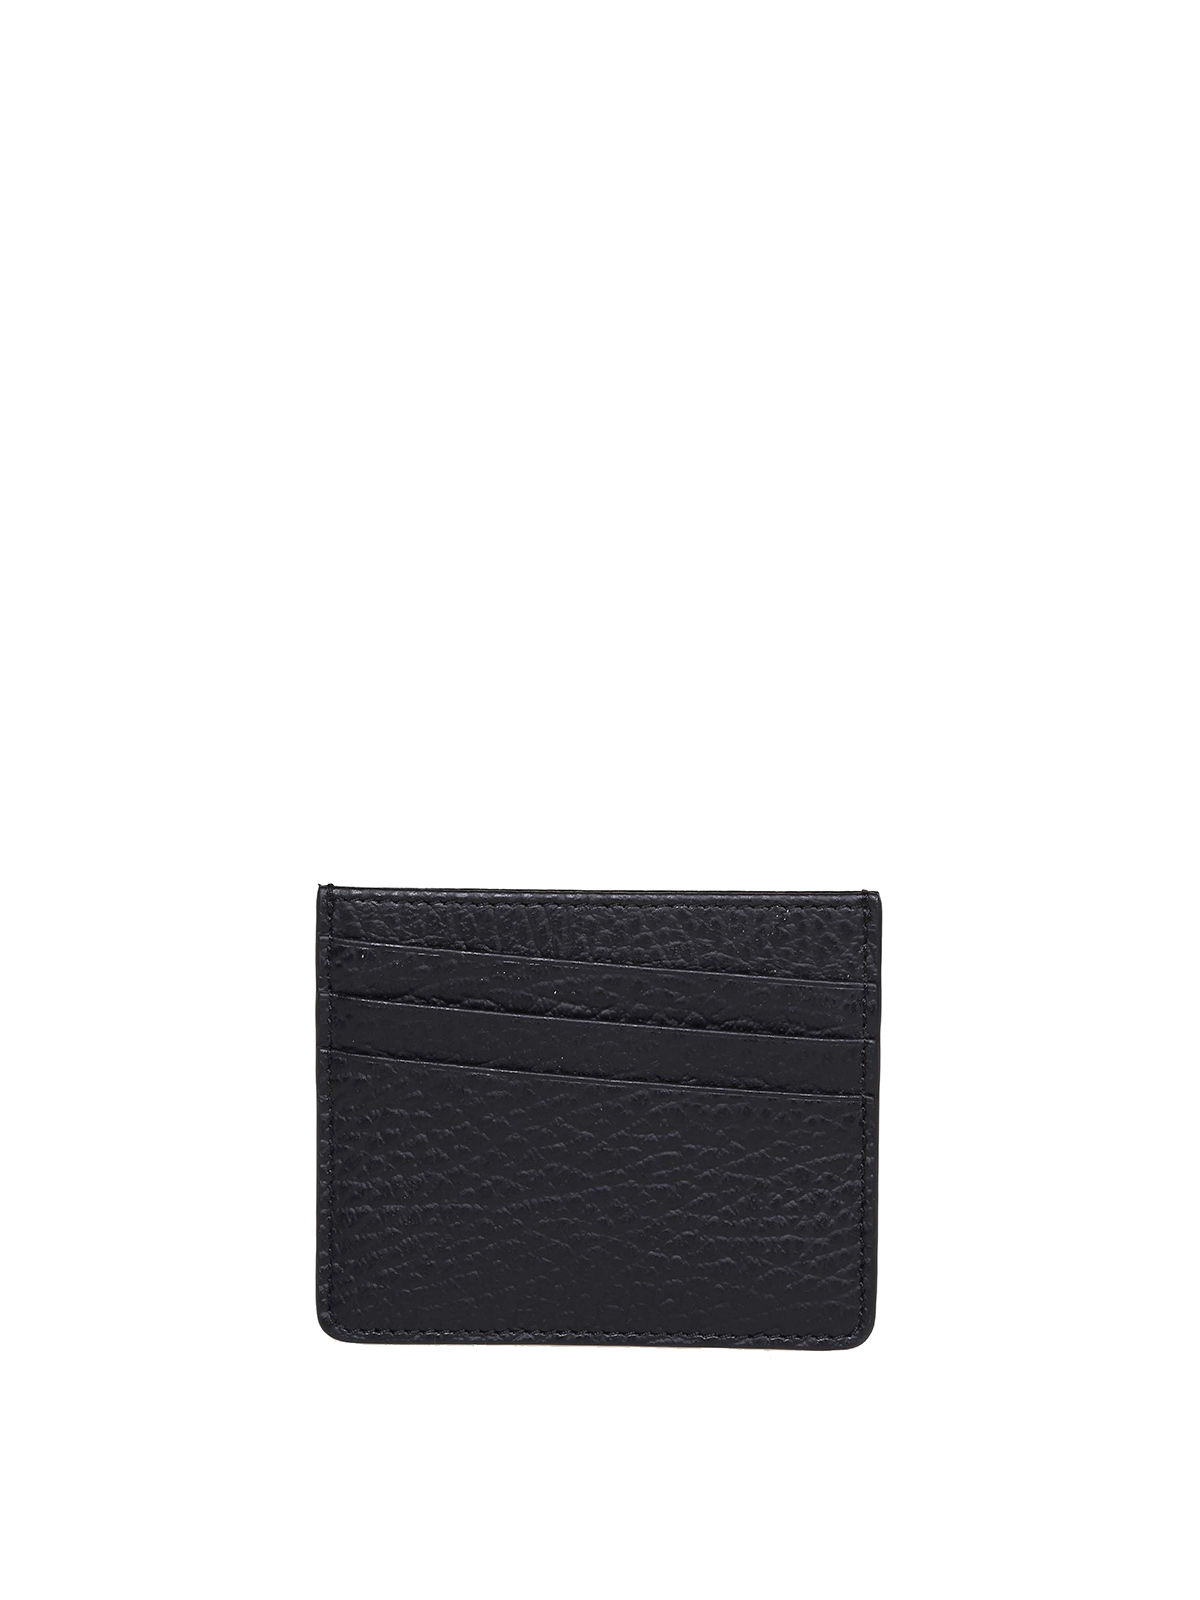 zonde hoofdzakelijk reflecteren Wallets & purses Maison Margiela - Black leather card holder -  SA1VX0006P4455T8013